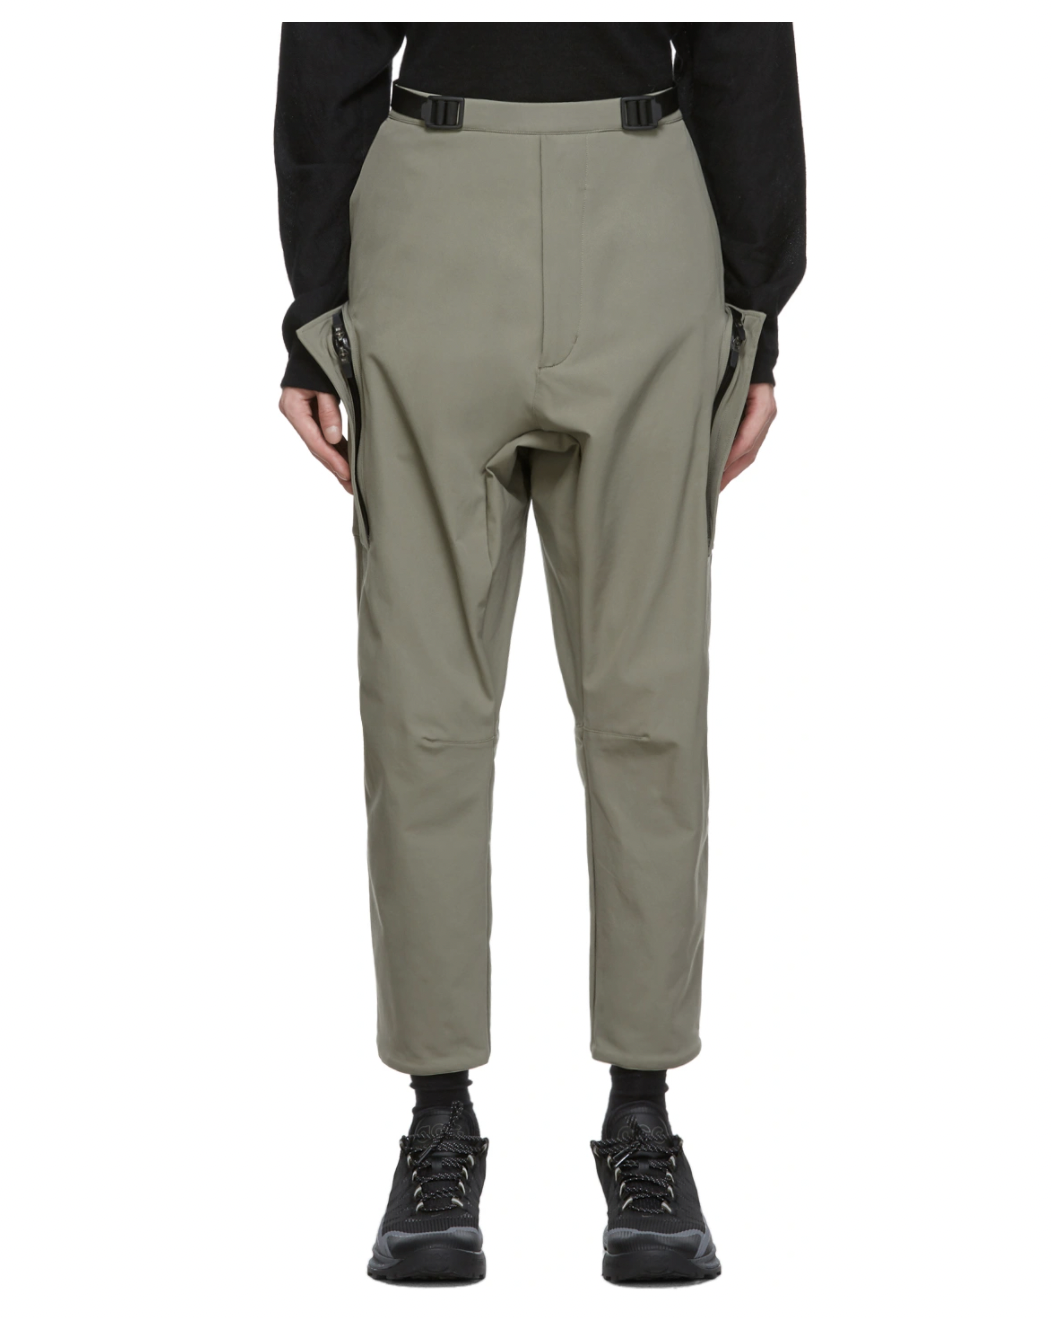 CyberFits Unisex Pants I Techwear Design I  Limited Edition I Techwear Style Clothing Mens Clothing Trousers 